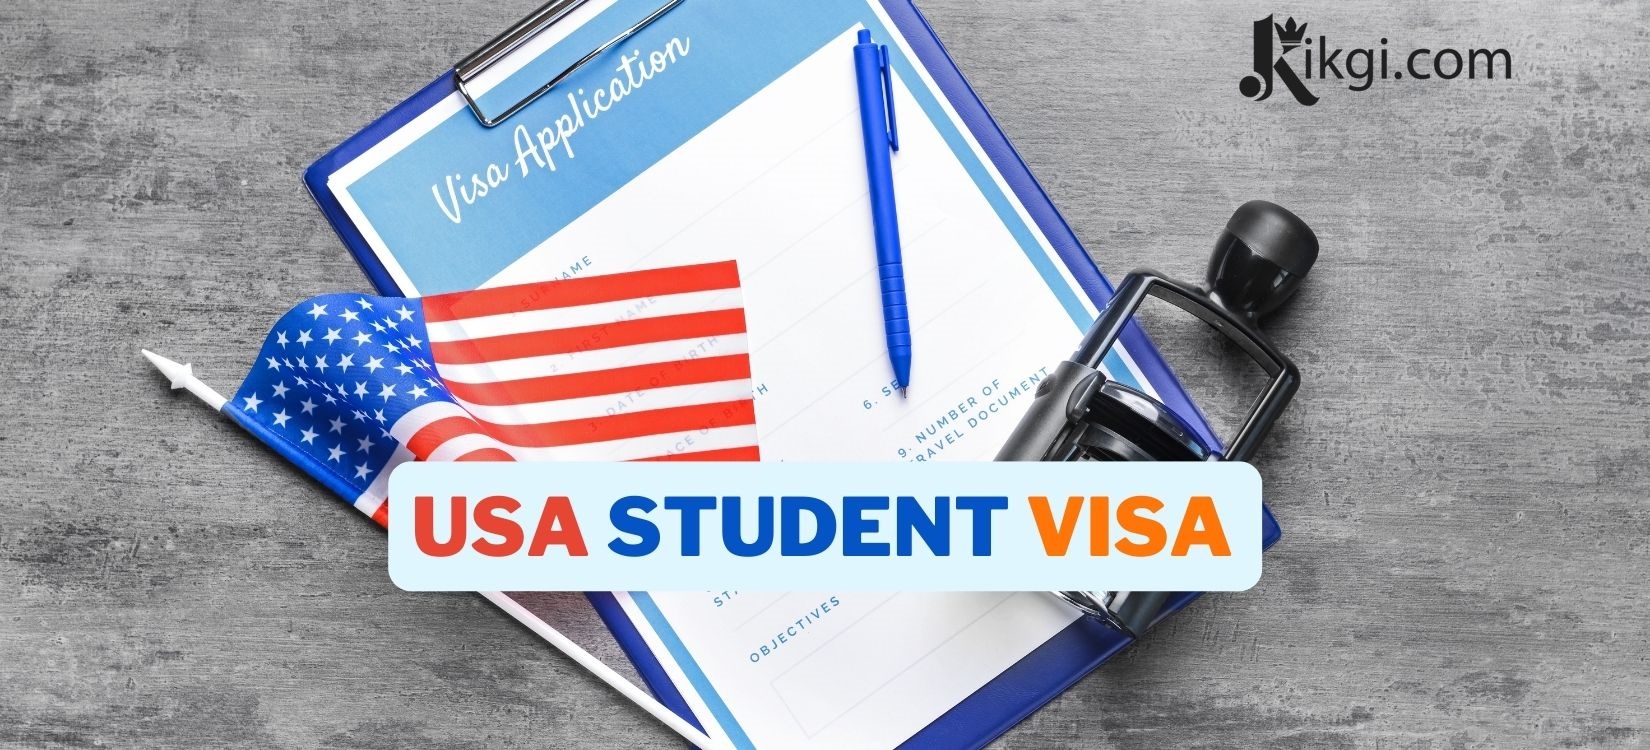 types of usa student Visa